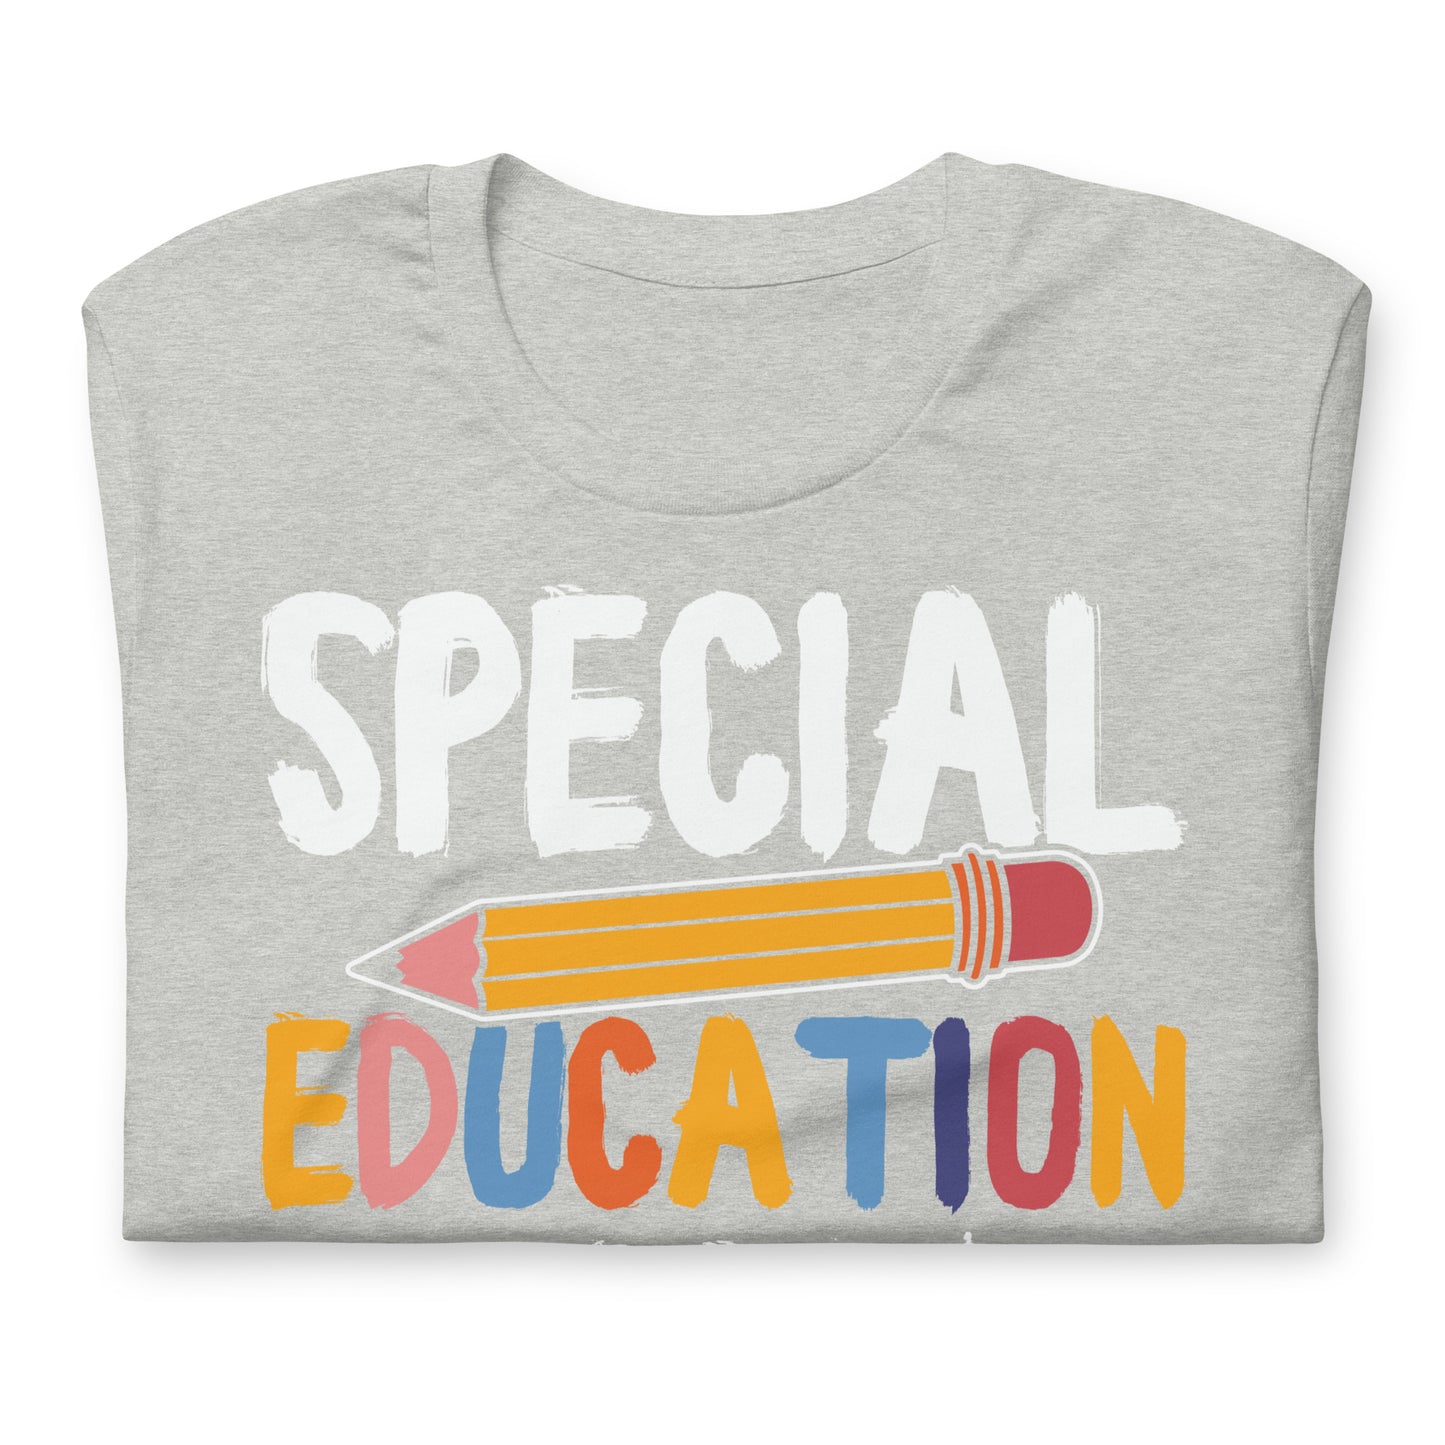 Special Education Crew Teacher Bella Canvas Unisex T-Shirt